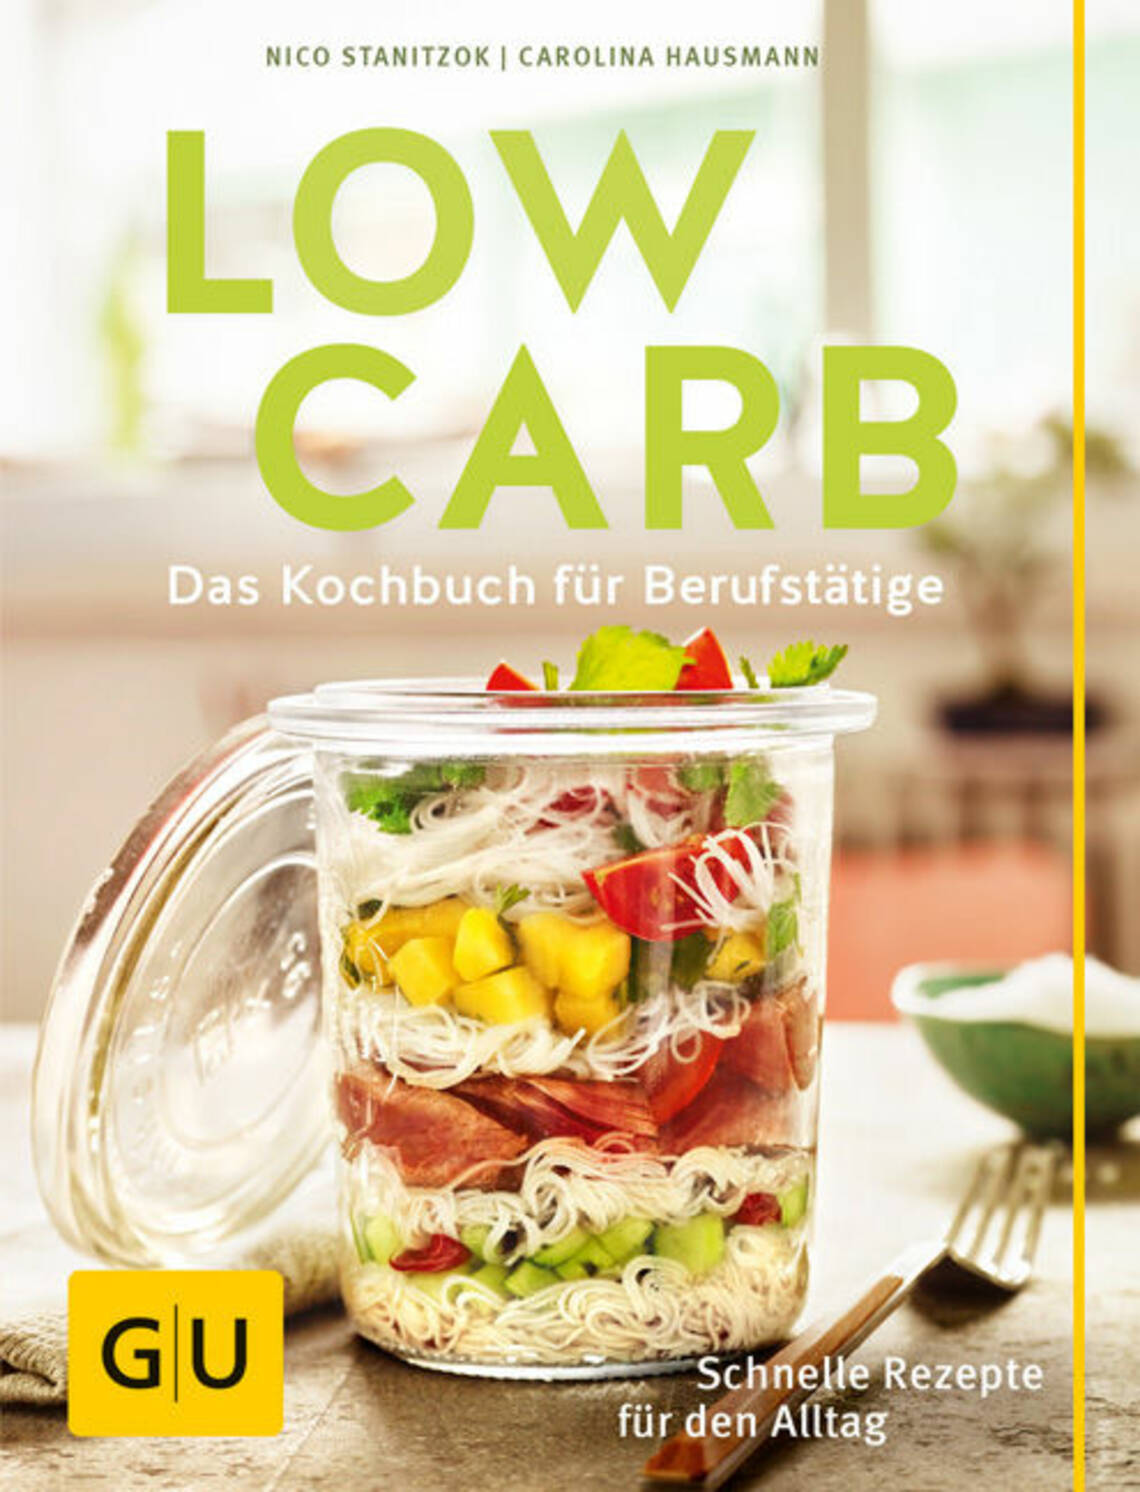 Low Carb von Carolina Hausmann, Cora Wetzstein, Nico Stanitzok